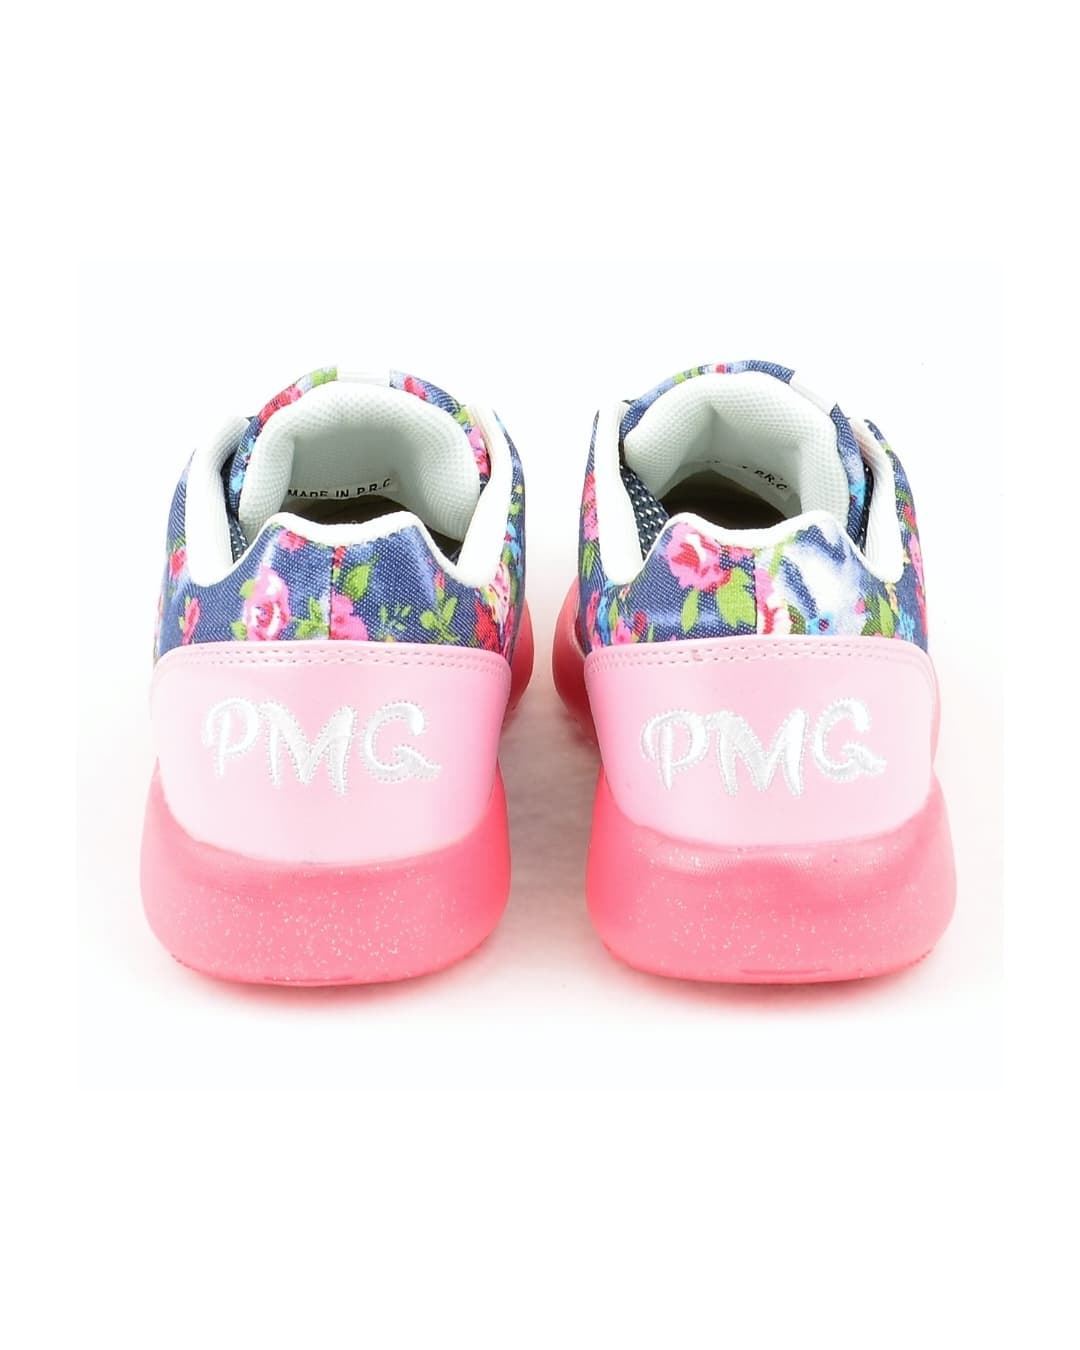 Primigi flower print canvas sneakers for girls - Image 2